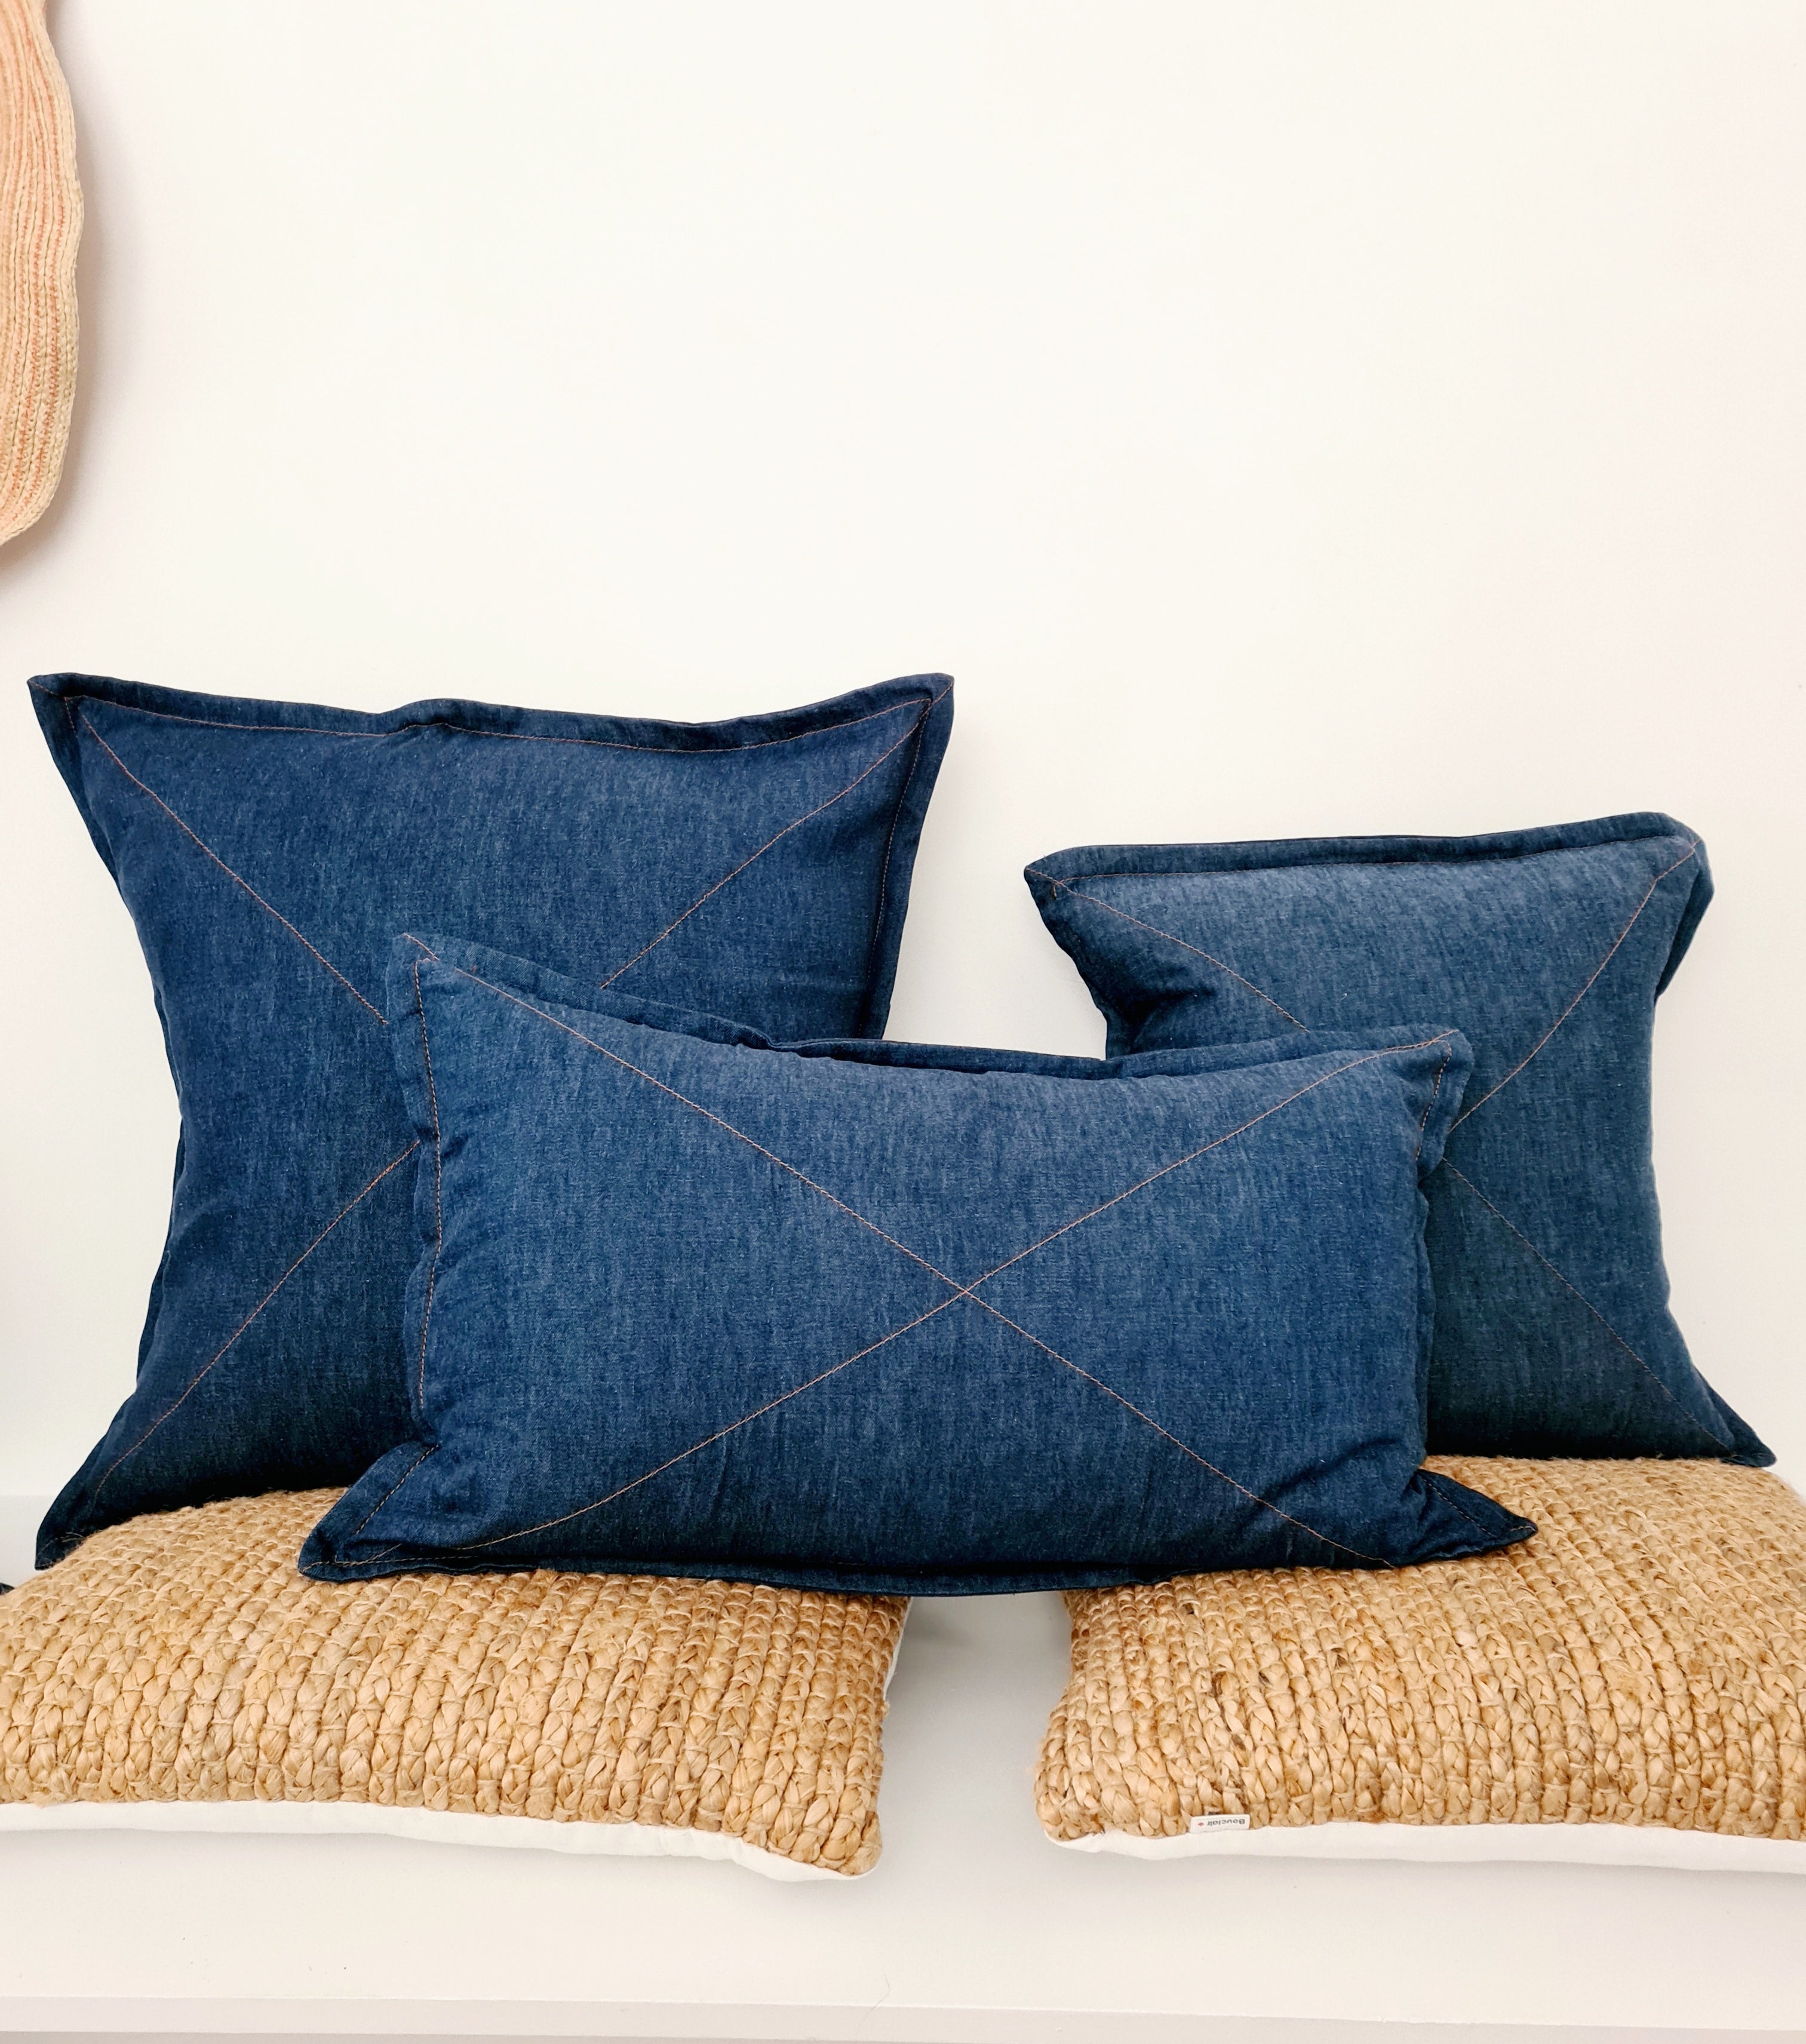 Organic Denim Cushions - Hessian Pony Cushions The Spotted Quoll Studio 35 x 55cm Natural Stitch 